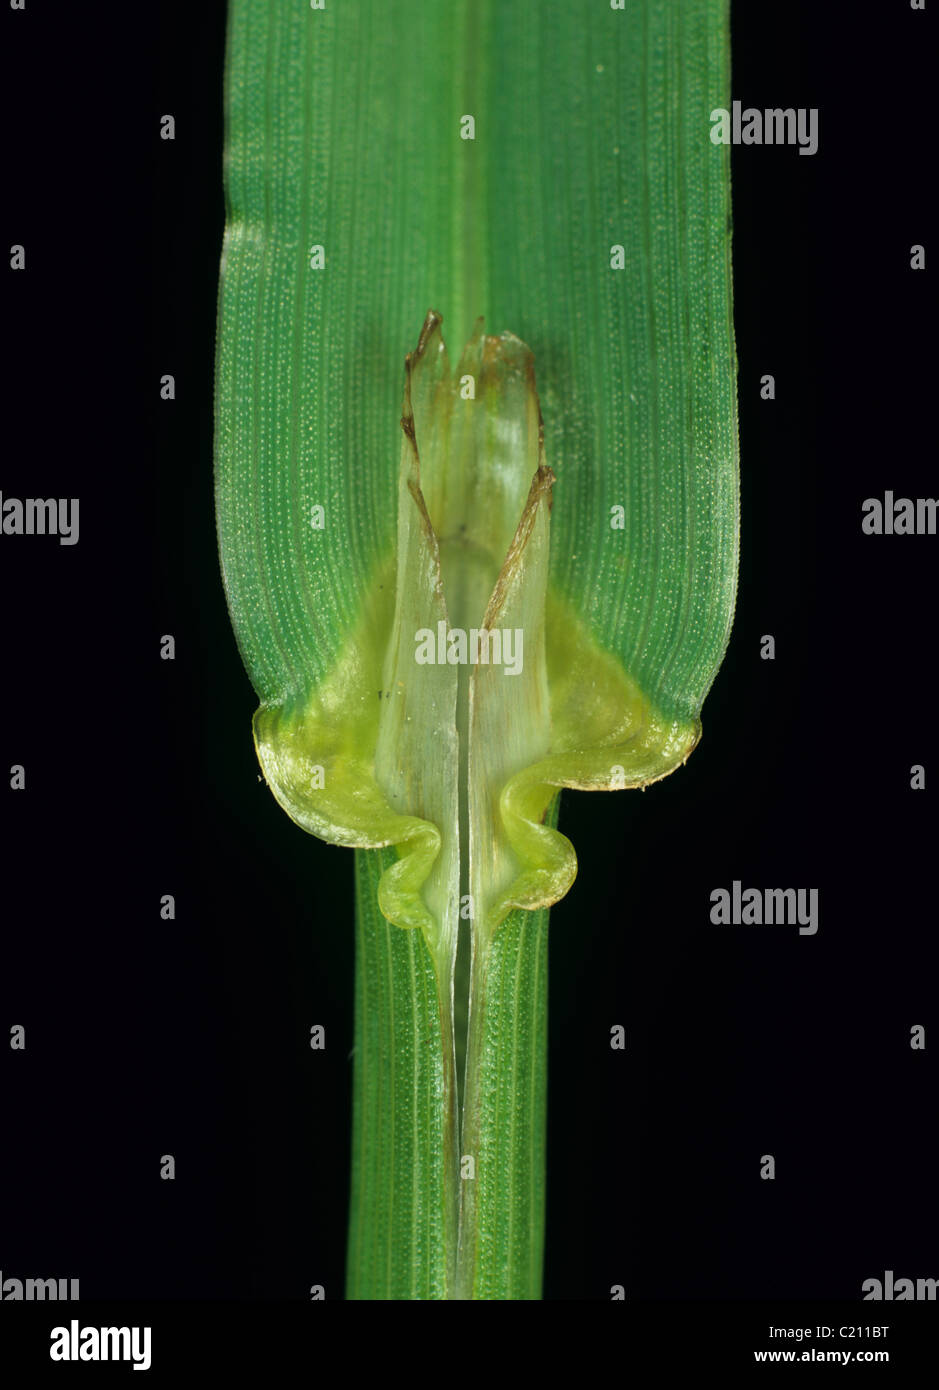 Brome Bromus inertus grass leaf ligule Stock Photo